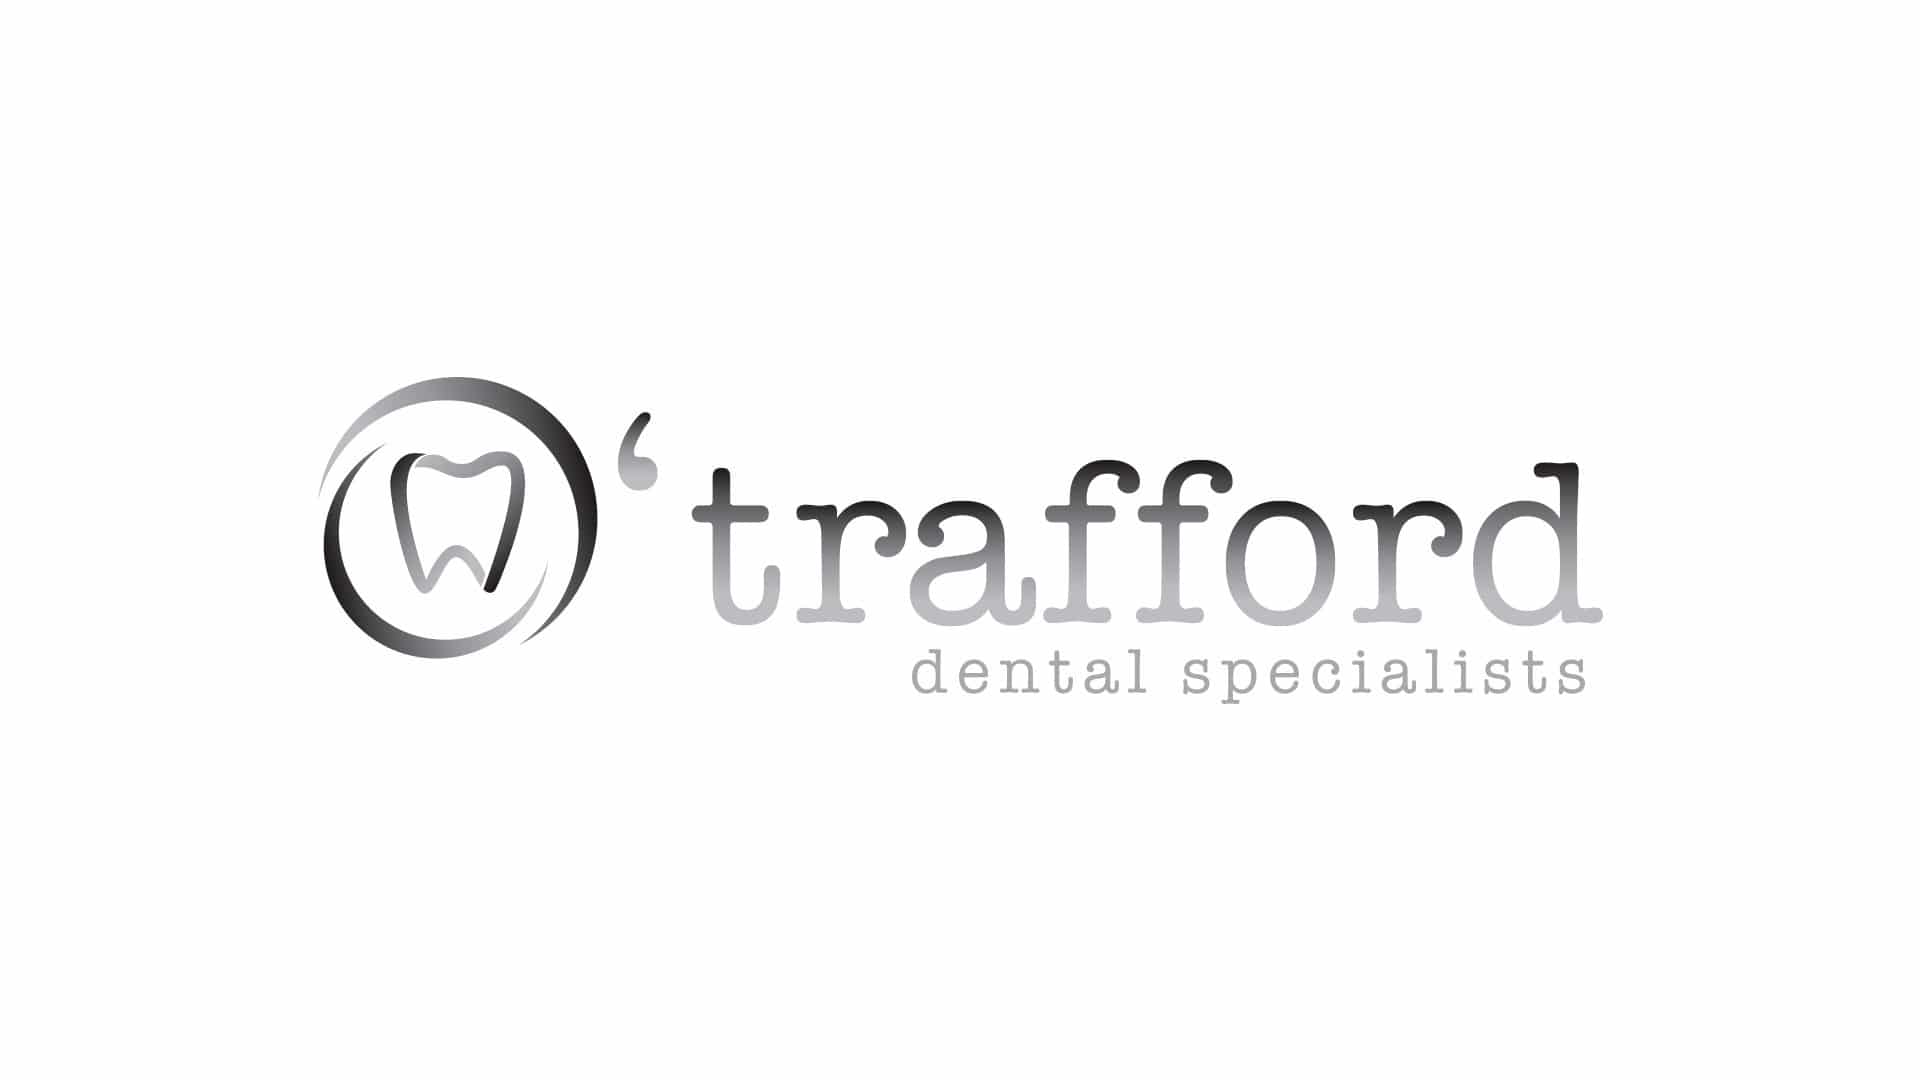 O’Trafford Dental Specialists Γραφίστας Σπύρος Ηλιόπουλος